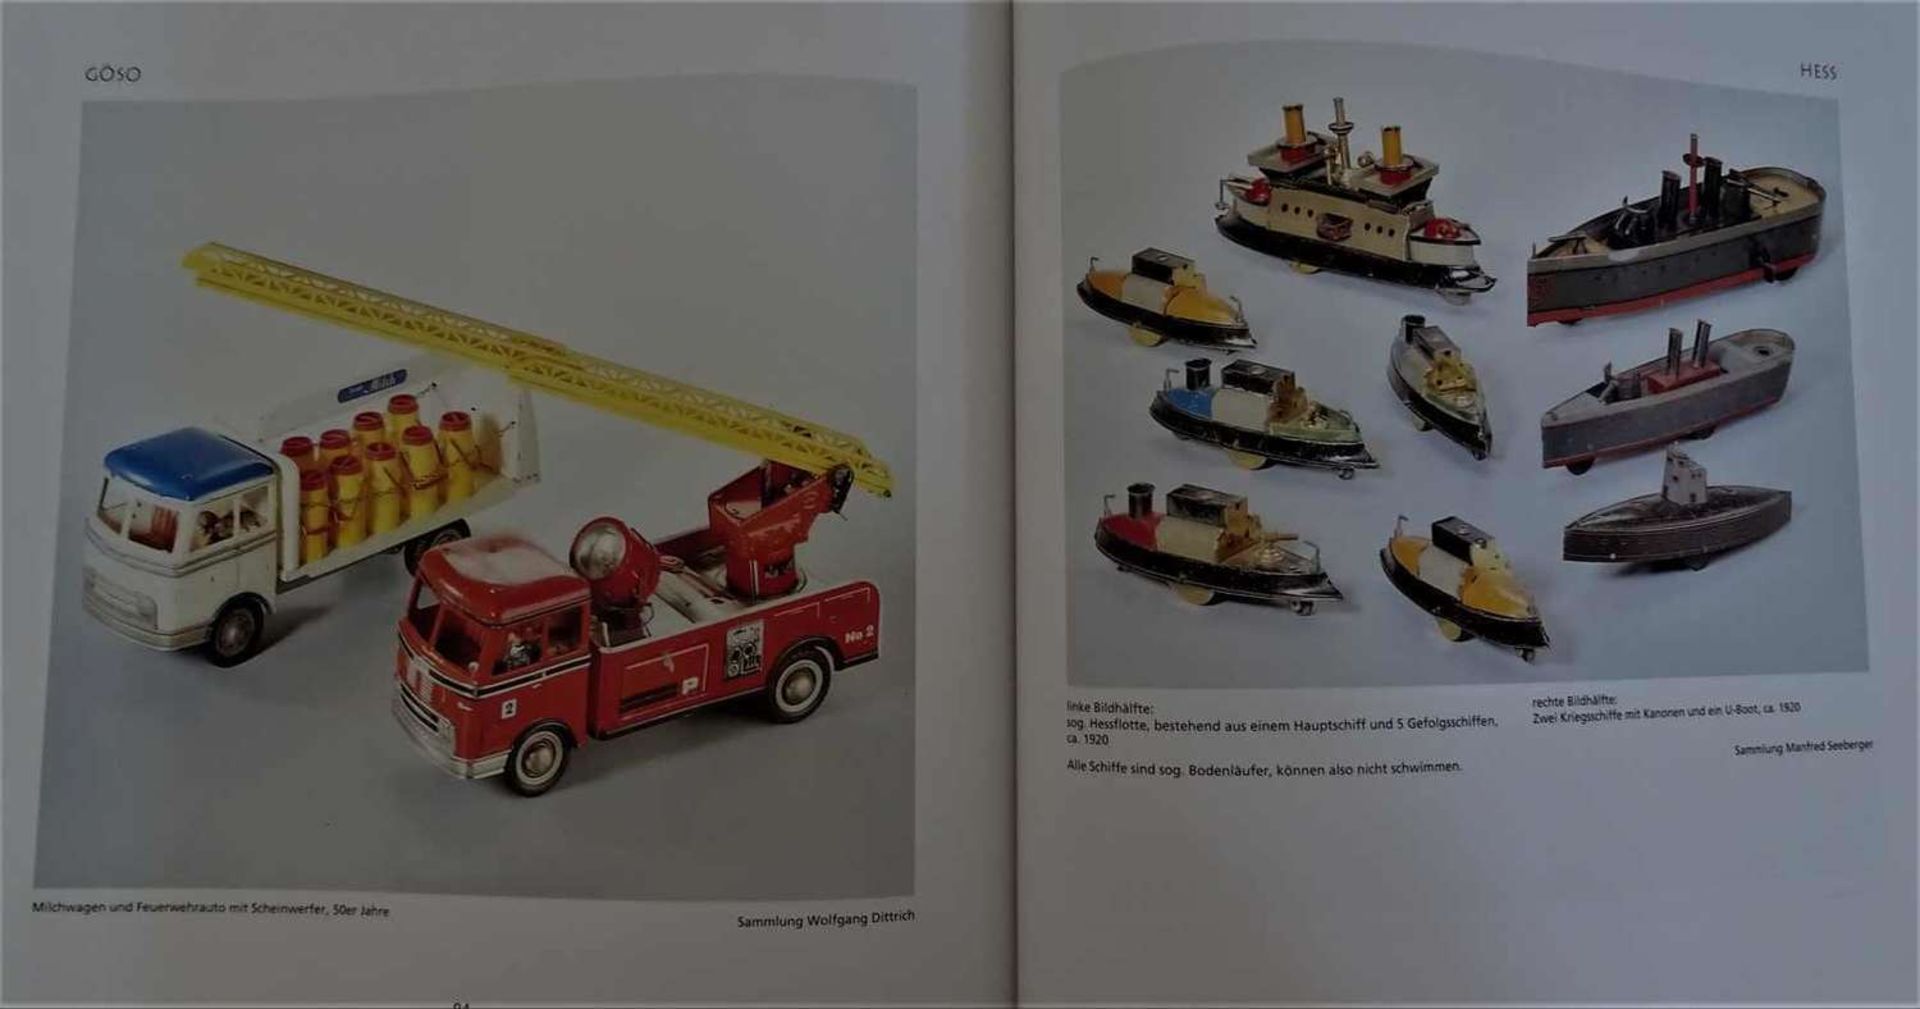 SCHUCO, Bing & Co. "Berühmtes Blechspielzeug aus Nürnberg", W. Tümmels, Nürnberg, ISBN 3-921590-15- - Image 4 of 4